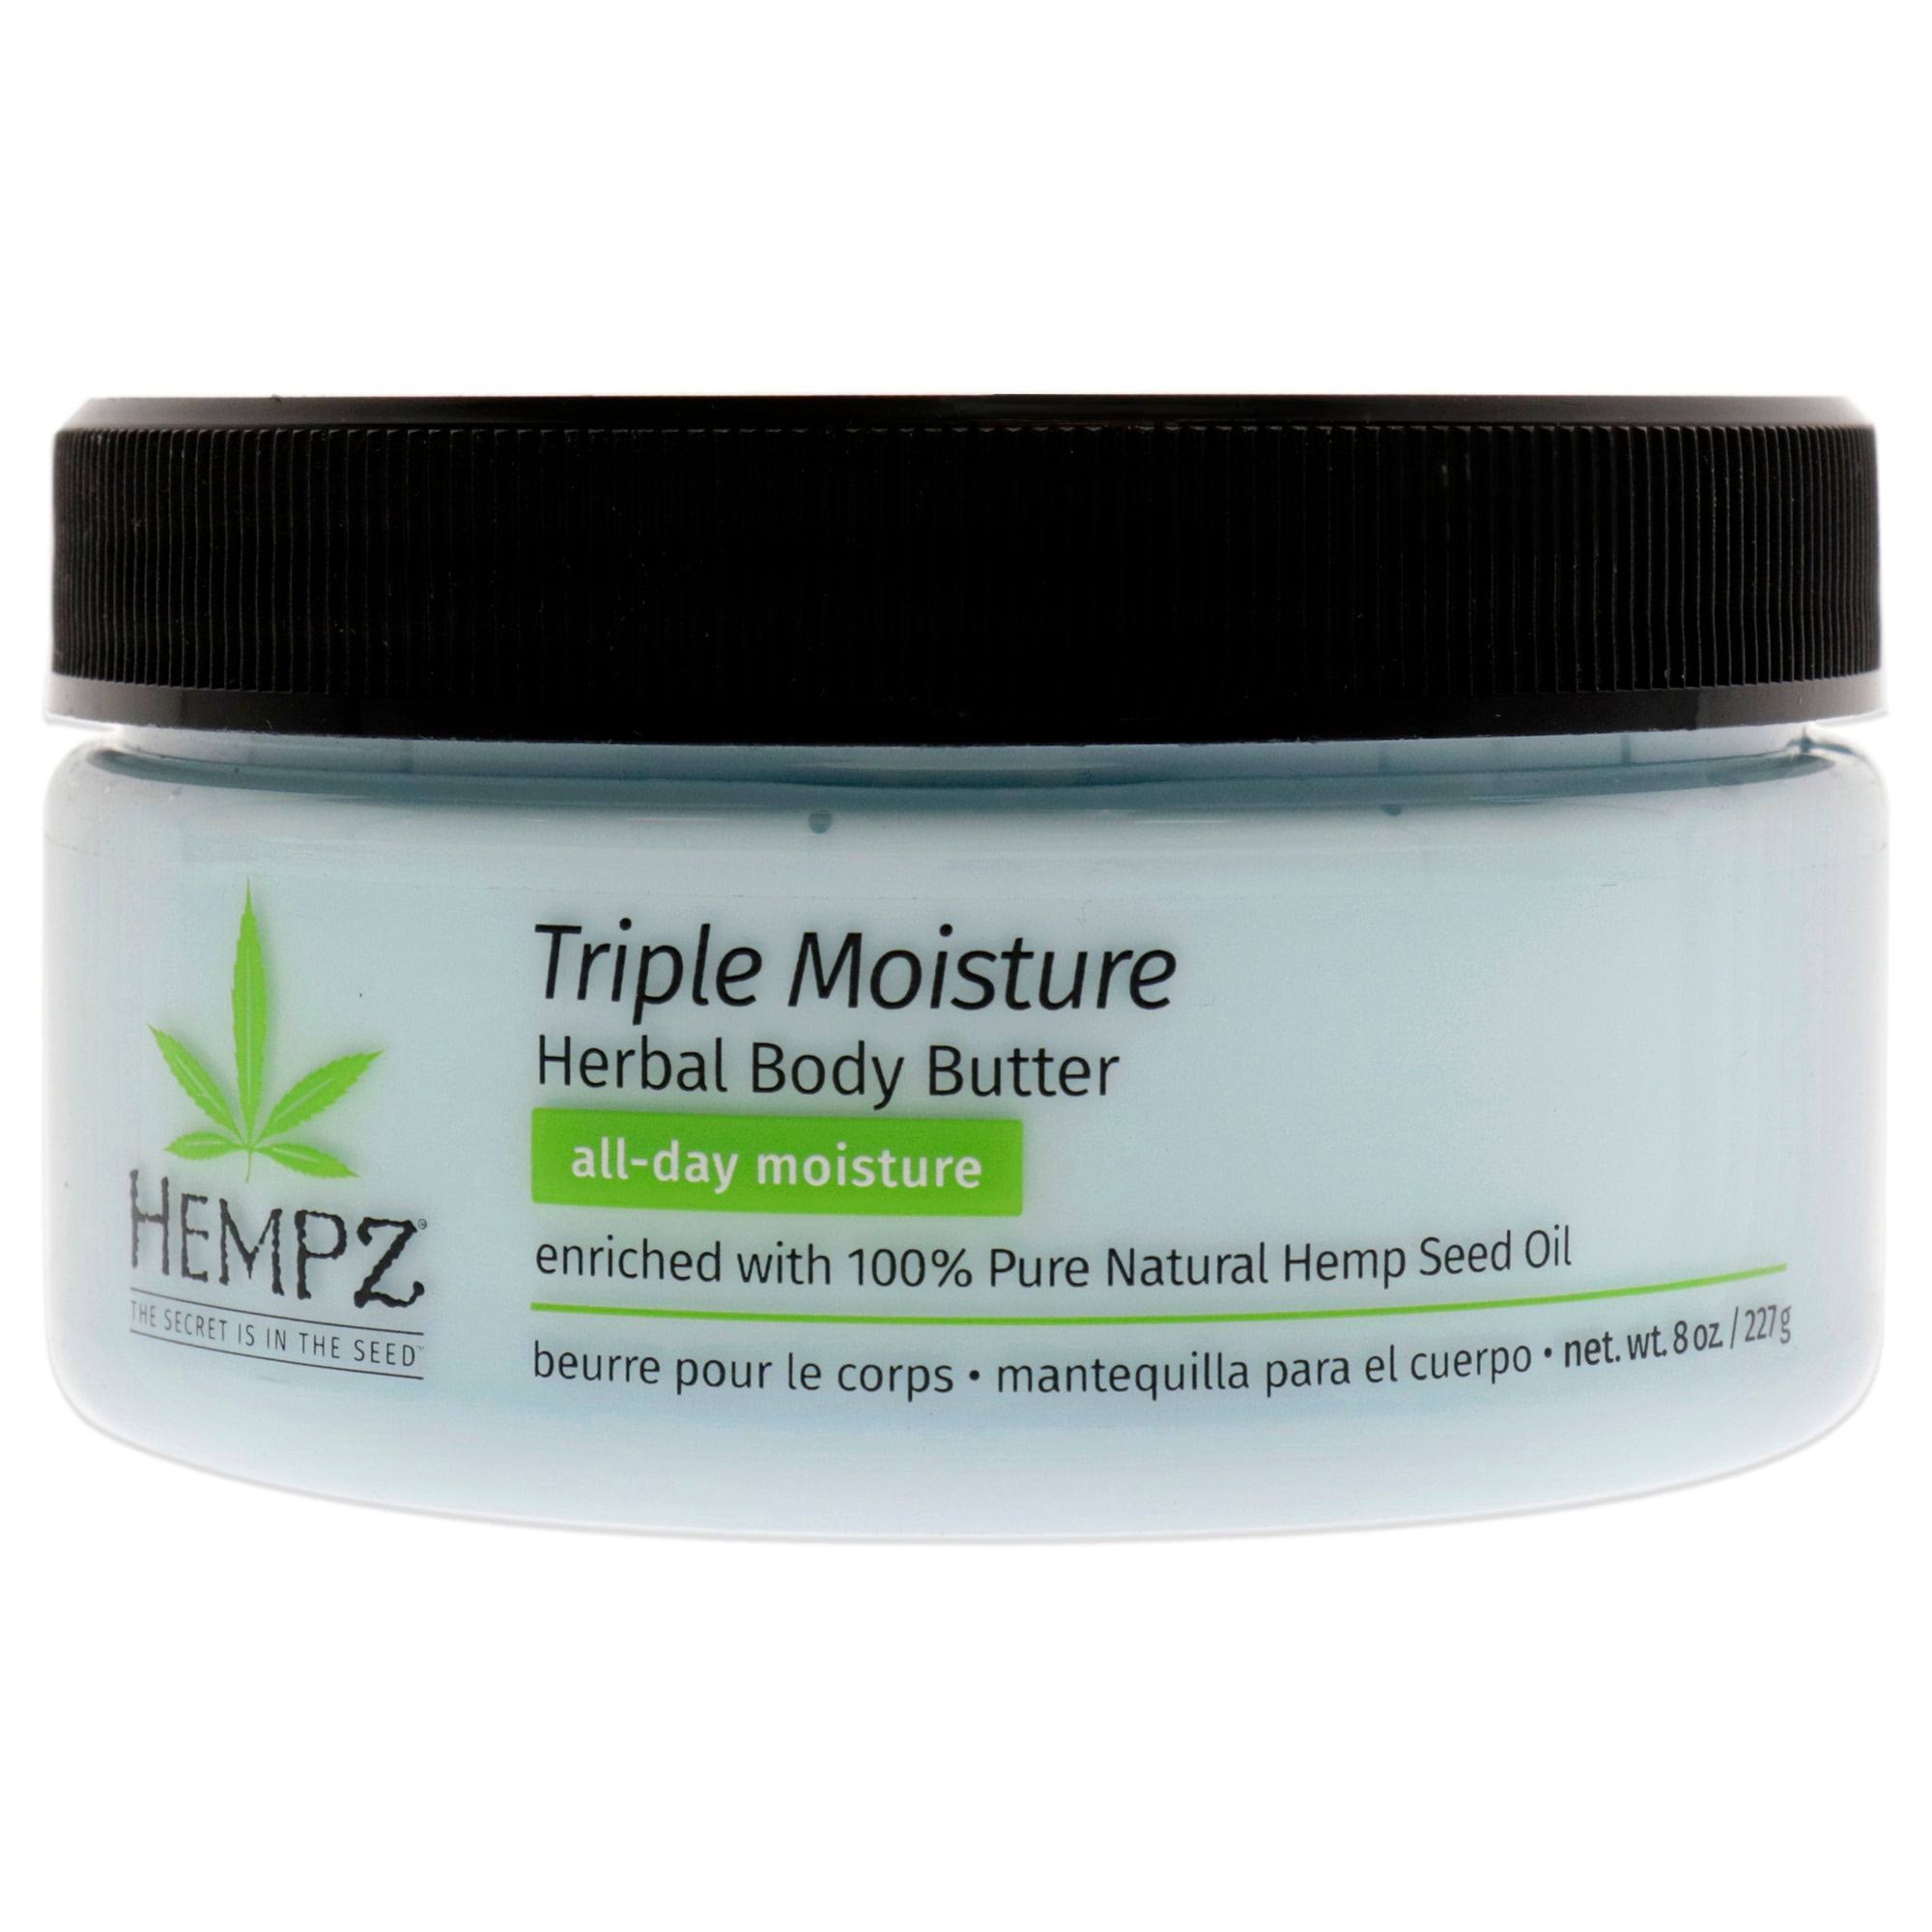 Hempz - Triple Moisture Herbal Body Butter - 2593237 - 676280048973